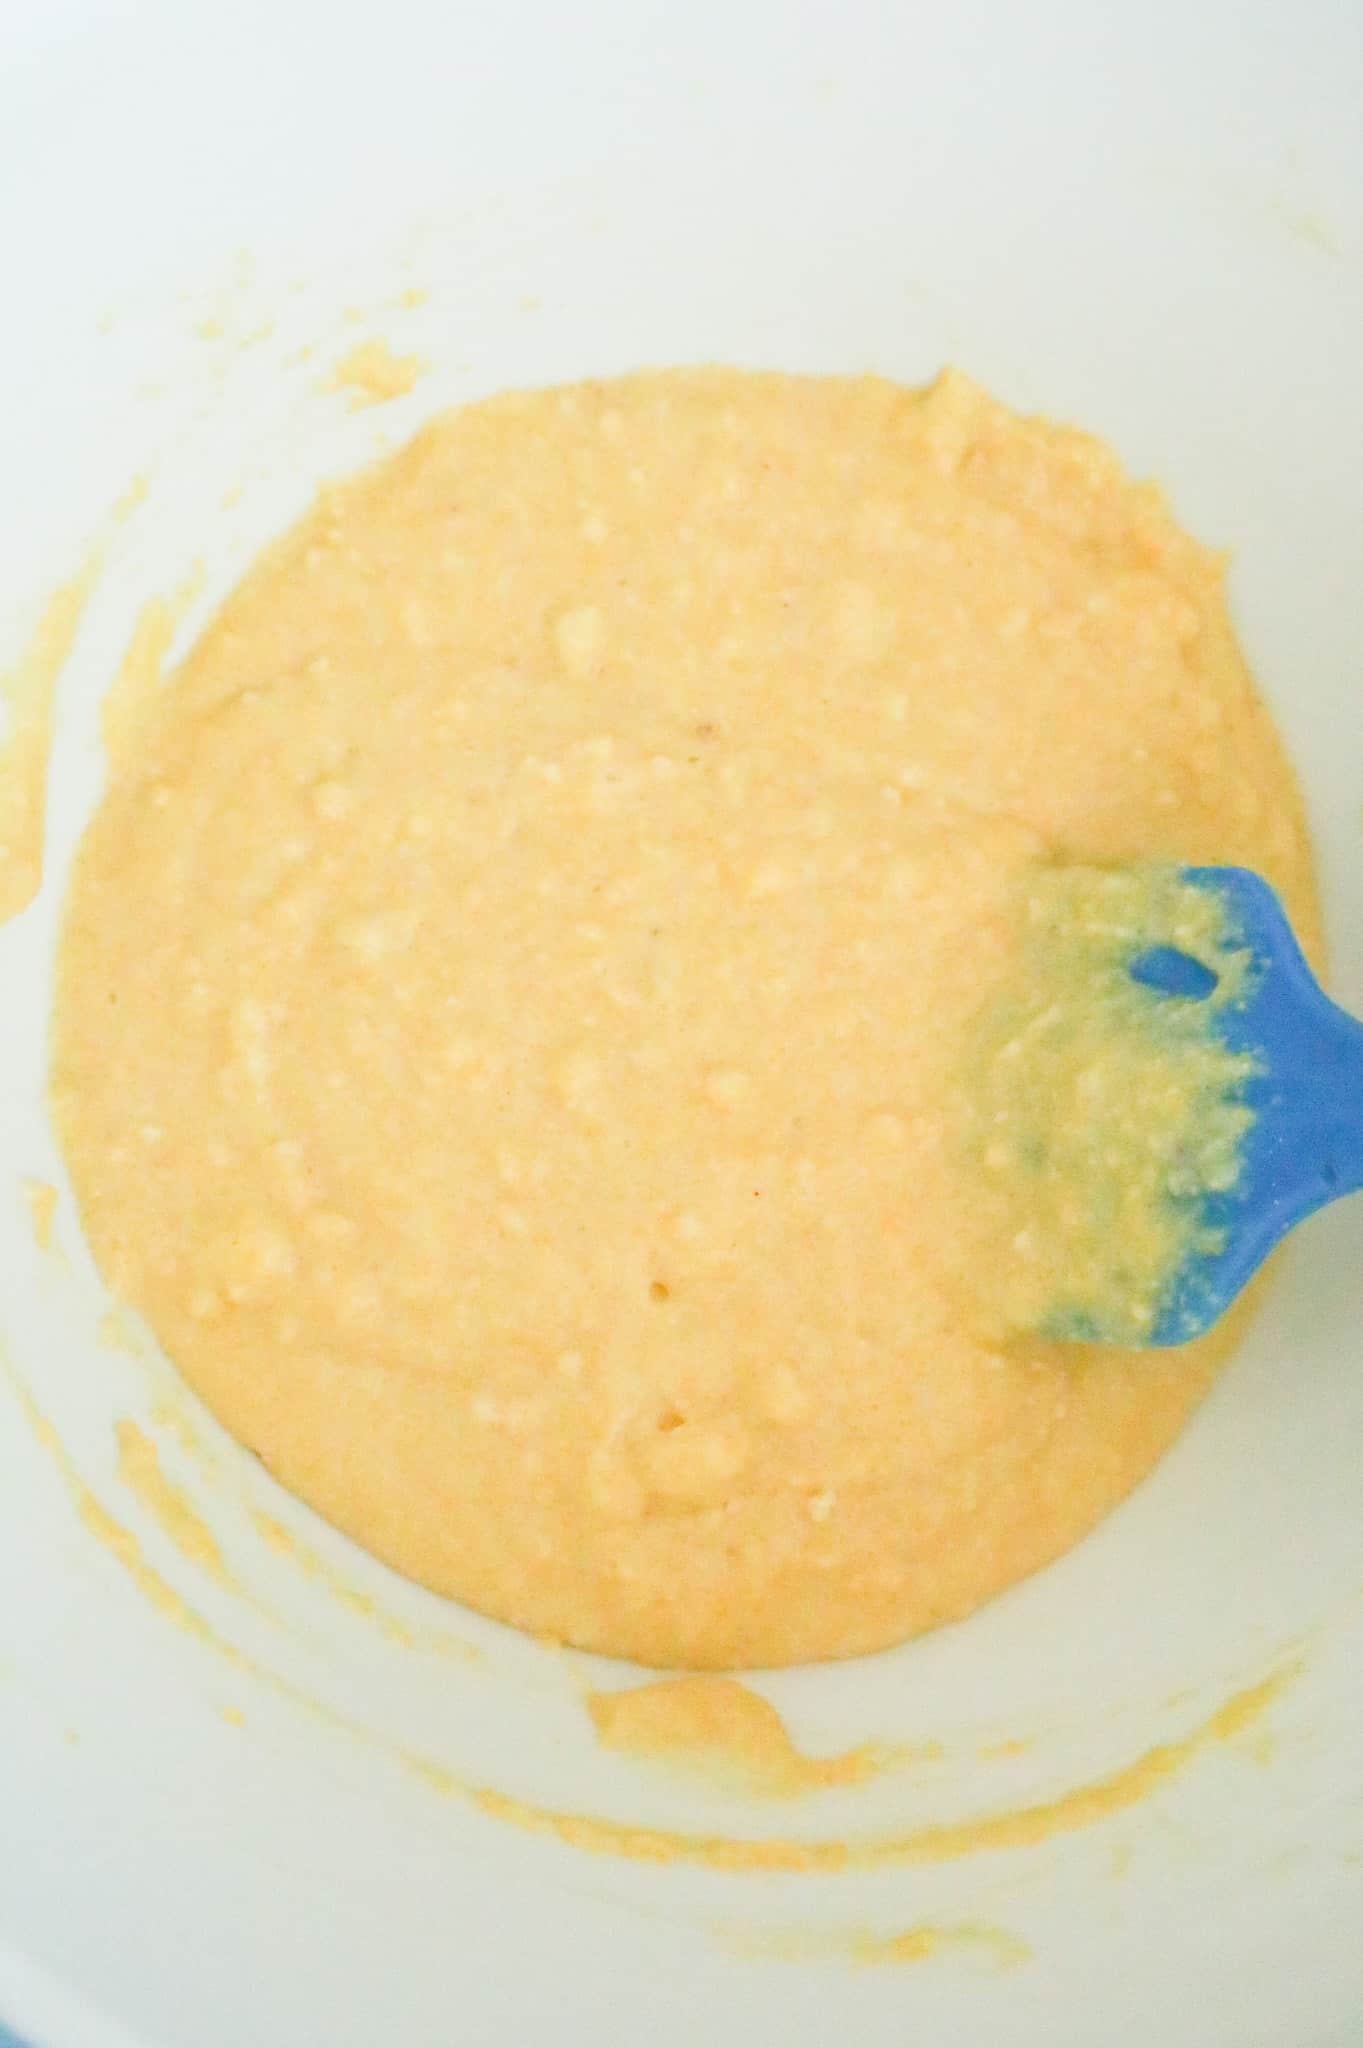 cornbread batter in a mixing bowl